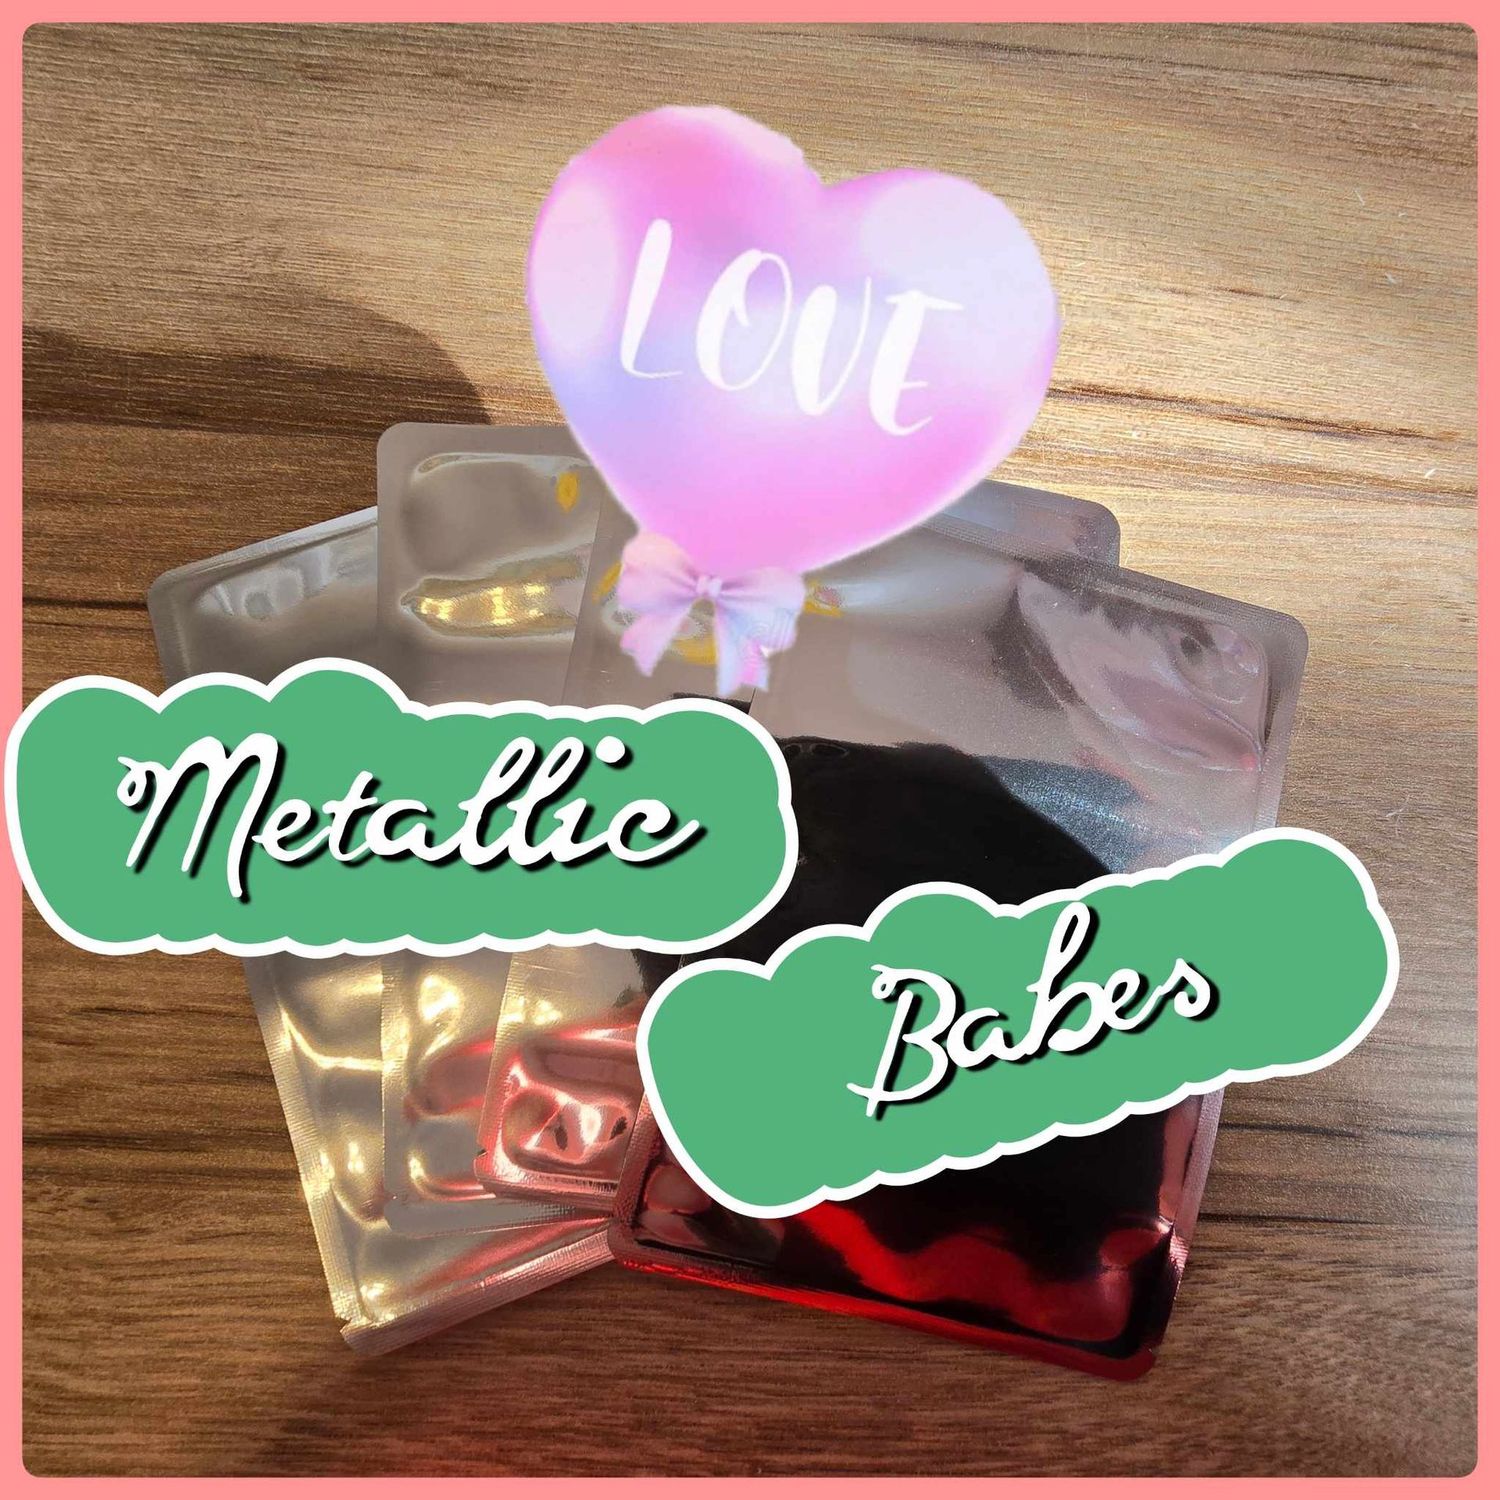 Girls go magic-Paket Love Metallic Babes
Magic Nail Wraps Exklusiv-Folien (davon ein Overlay)
4 x 16-er Nagelfolien